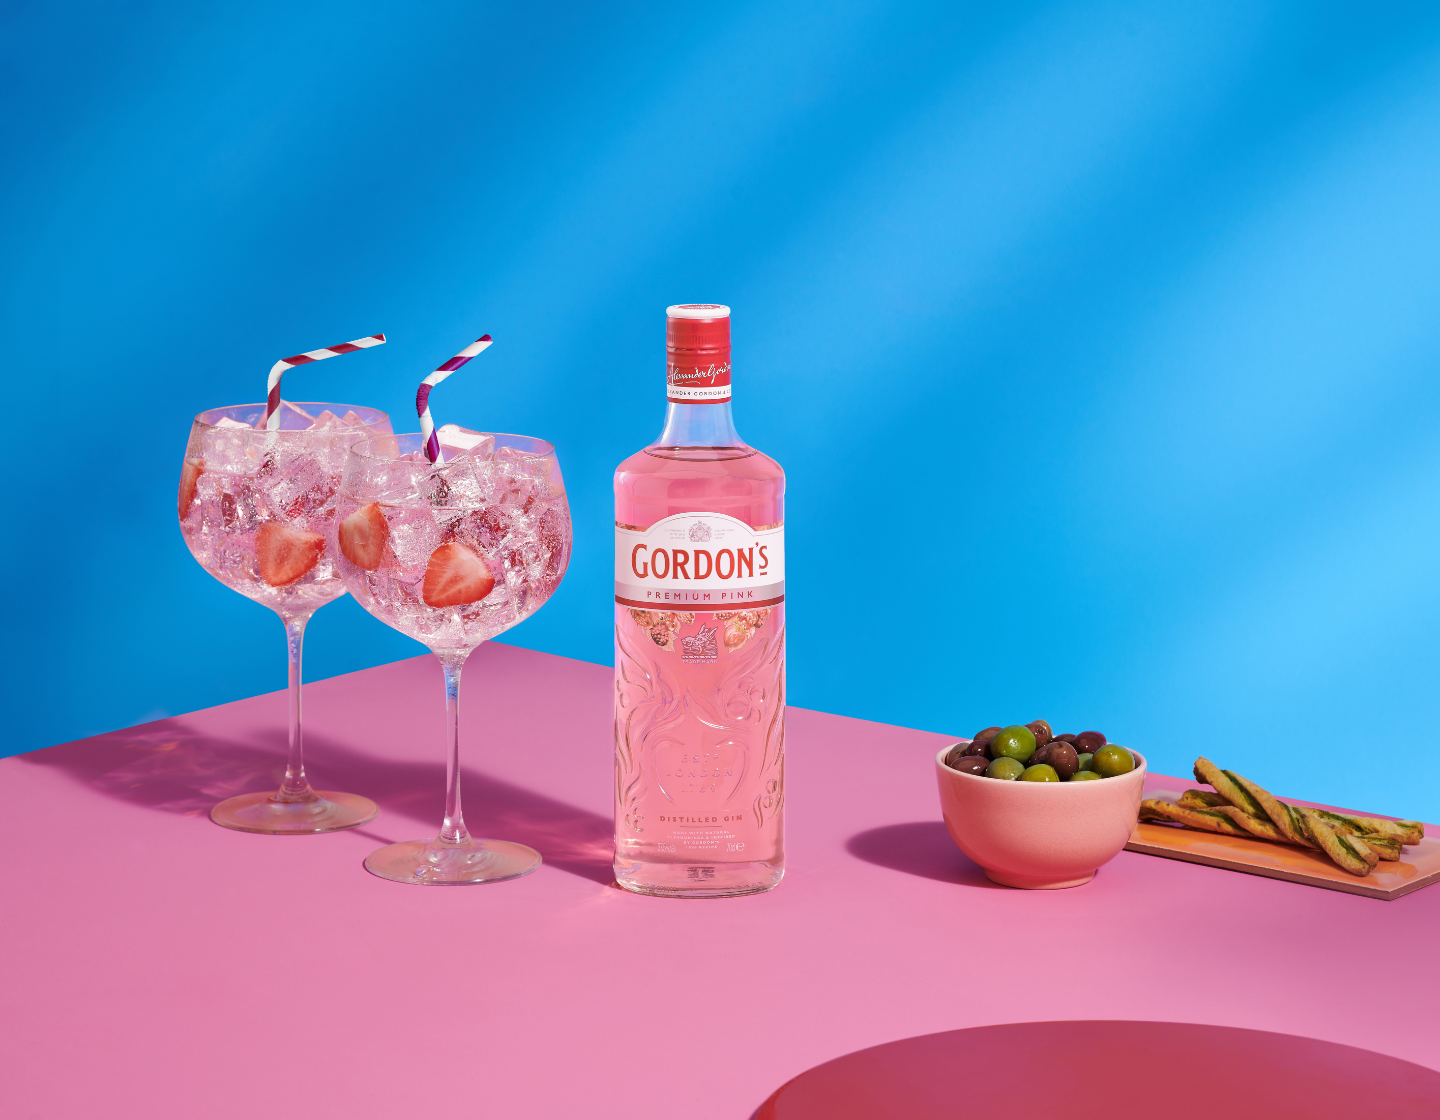 Botella de ginebra Gordon's Premium Pink junto a dos vasos de G&T sobre fondo rosa y azul